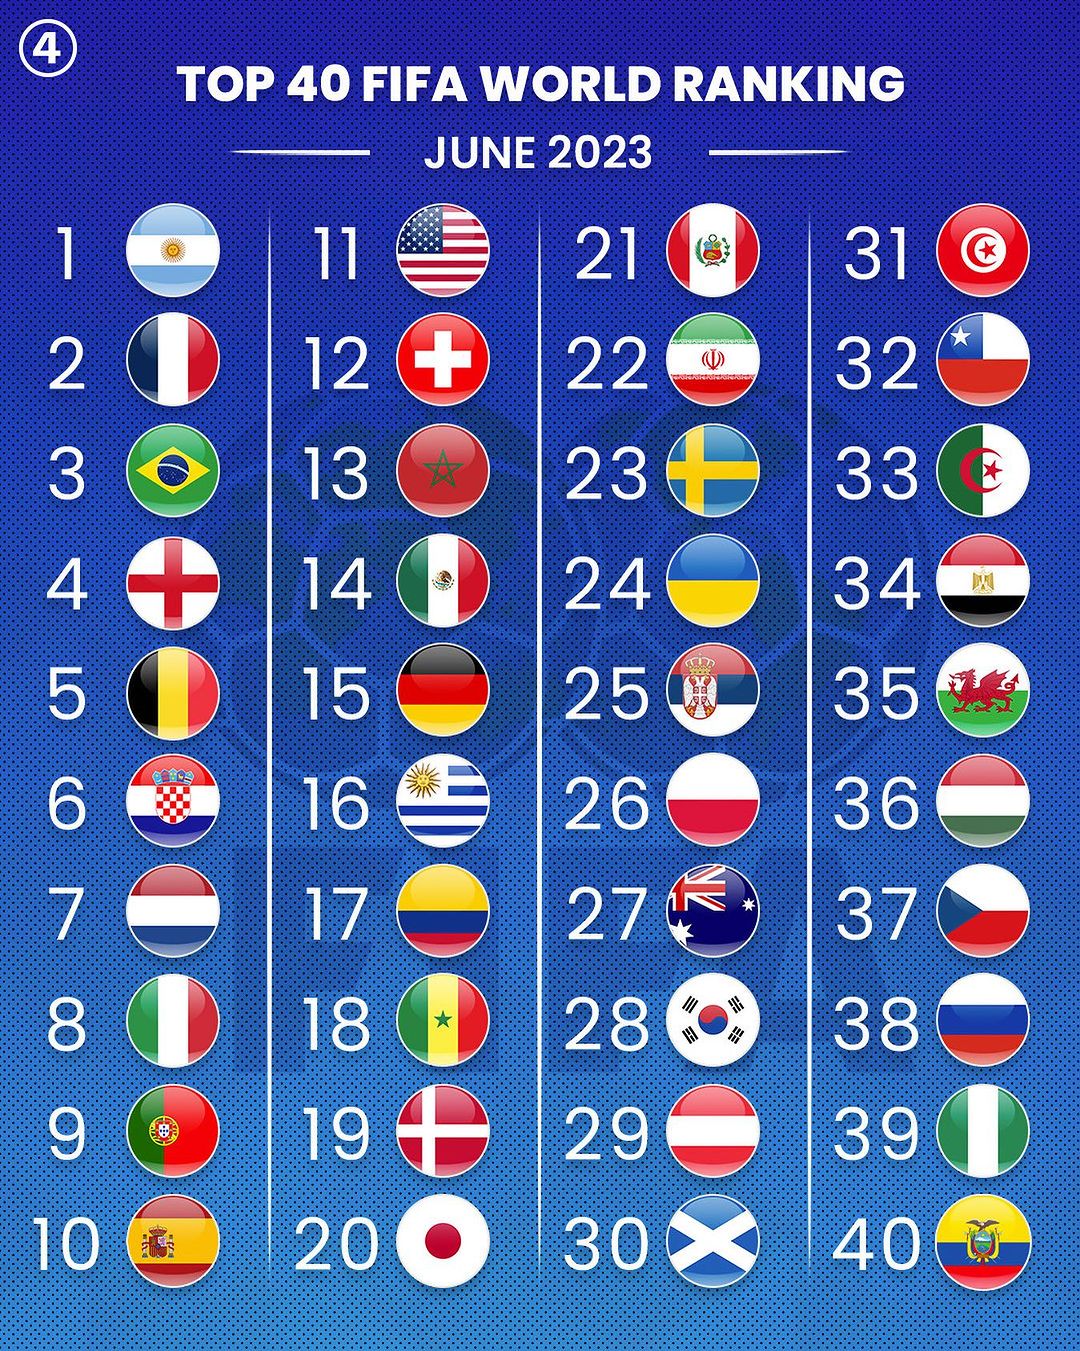 Top 40 FIFA World Ranking (JUNE 2023)